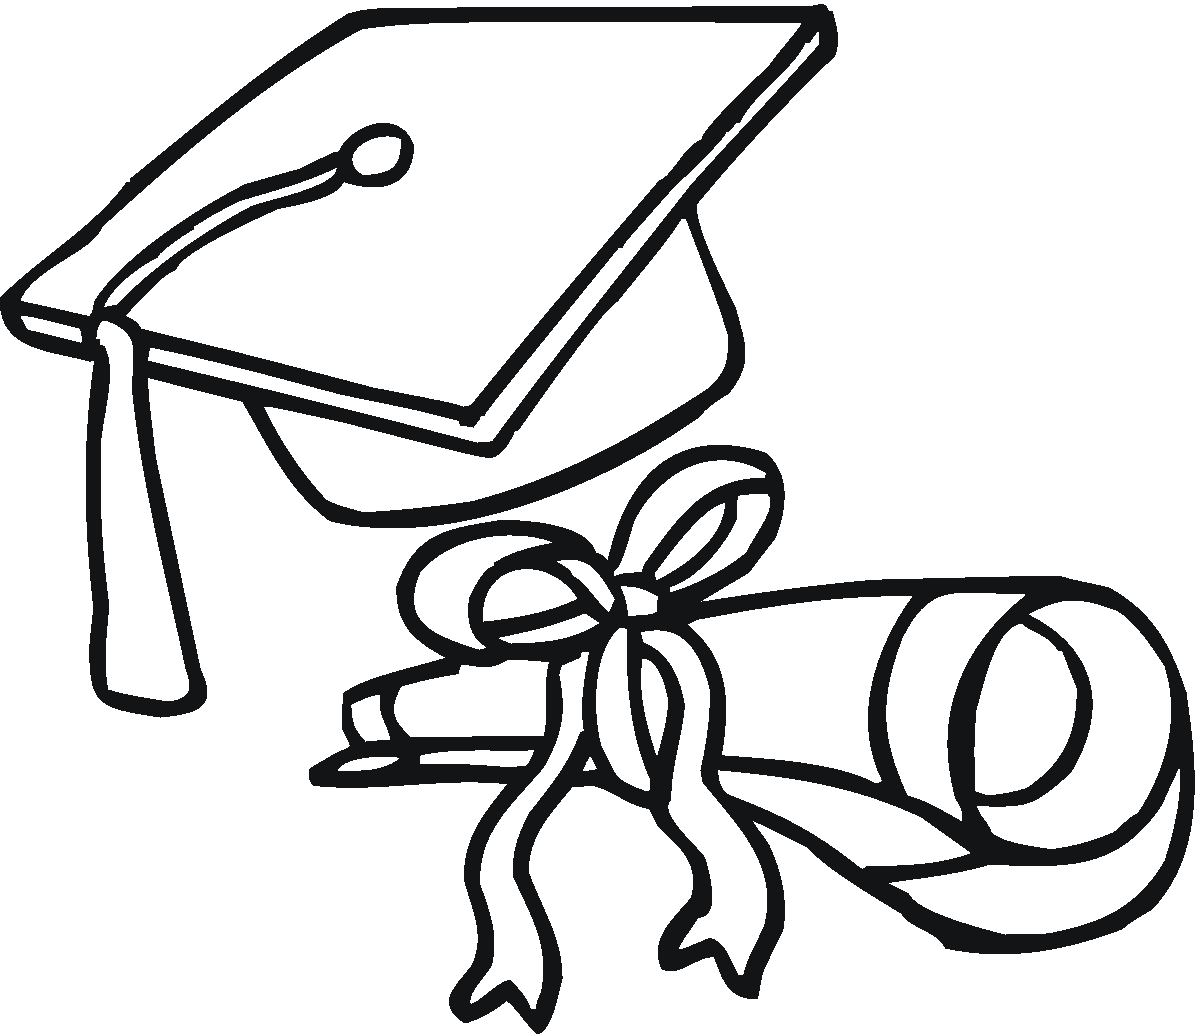 Images For > Congratulations Graduate Clip Art